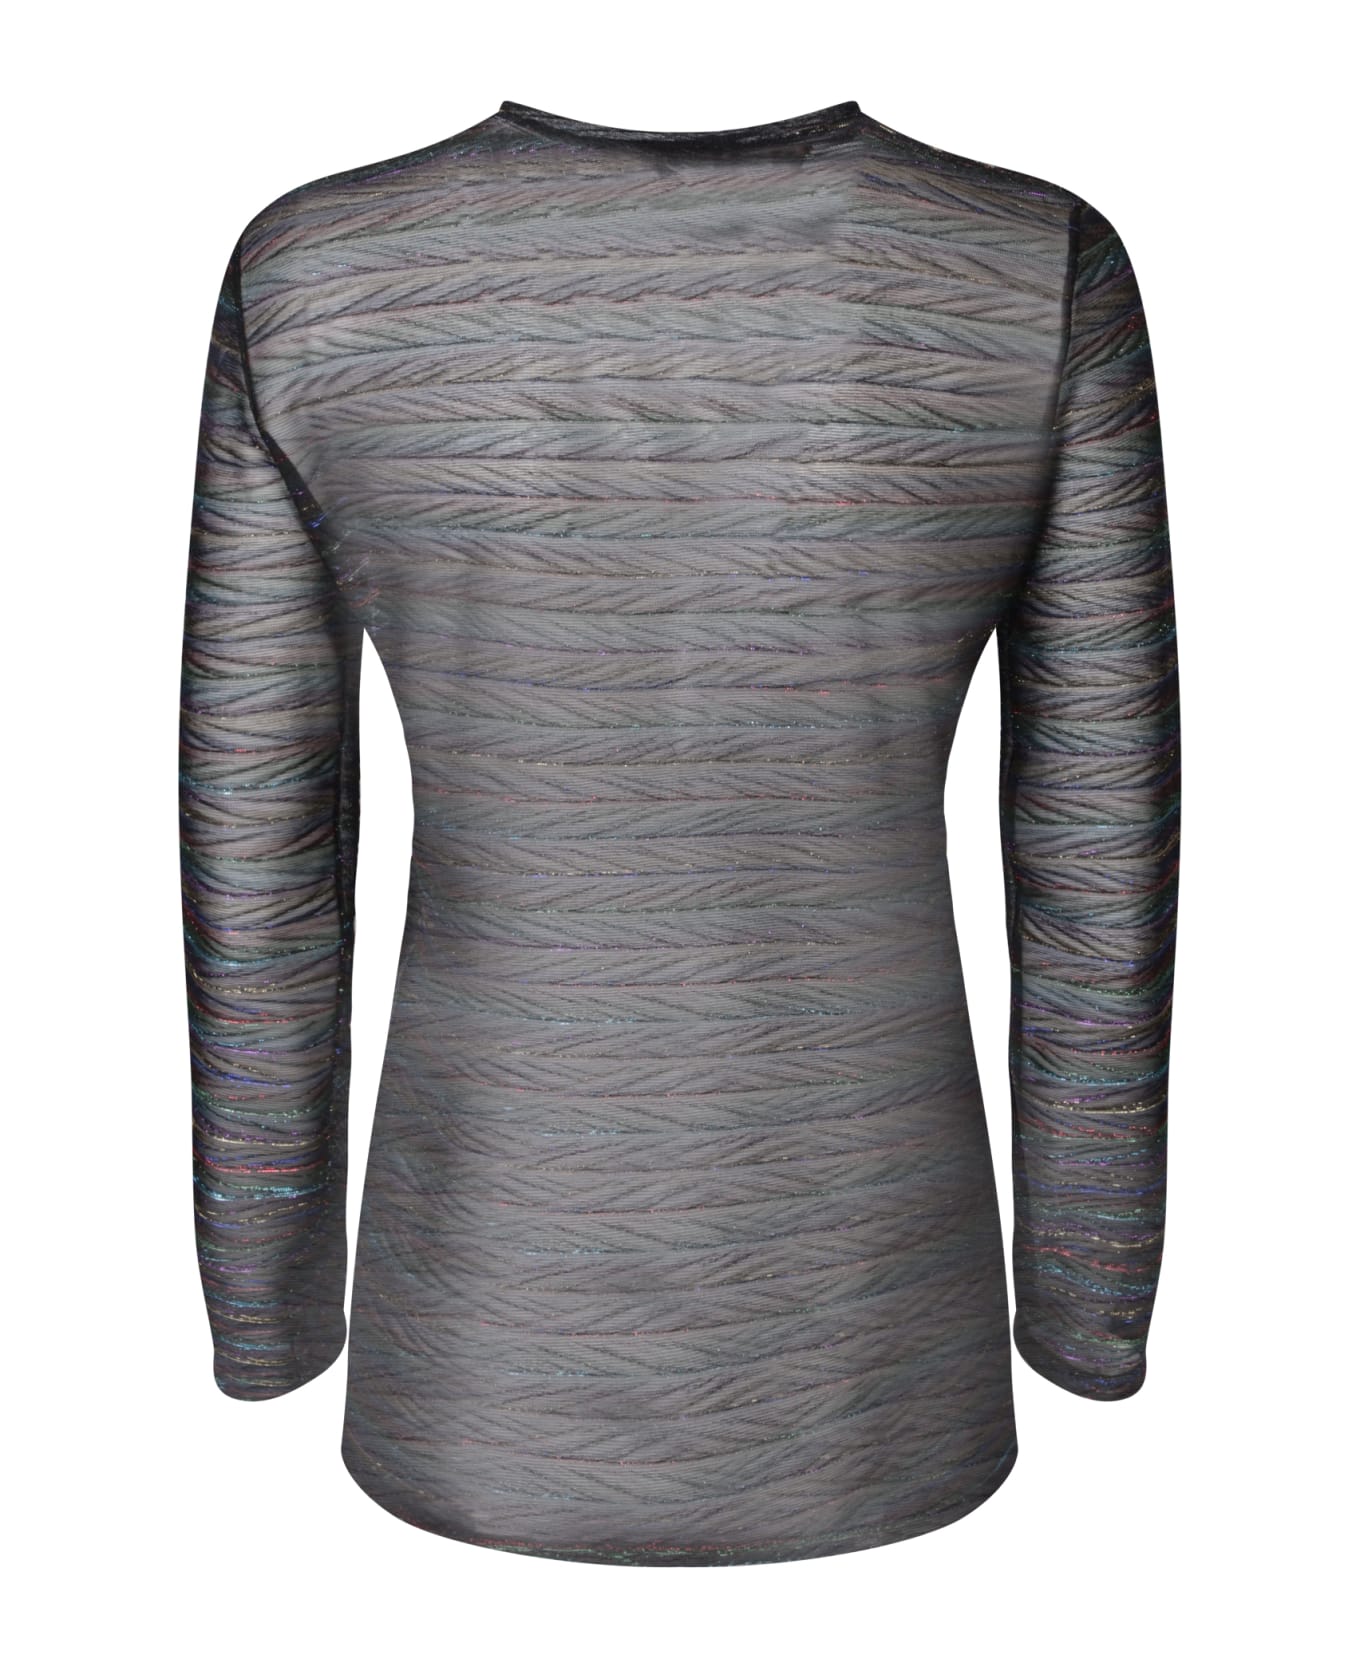 Alessandro Enriquez Striped Metallic Black/multicolor Shirt - Black